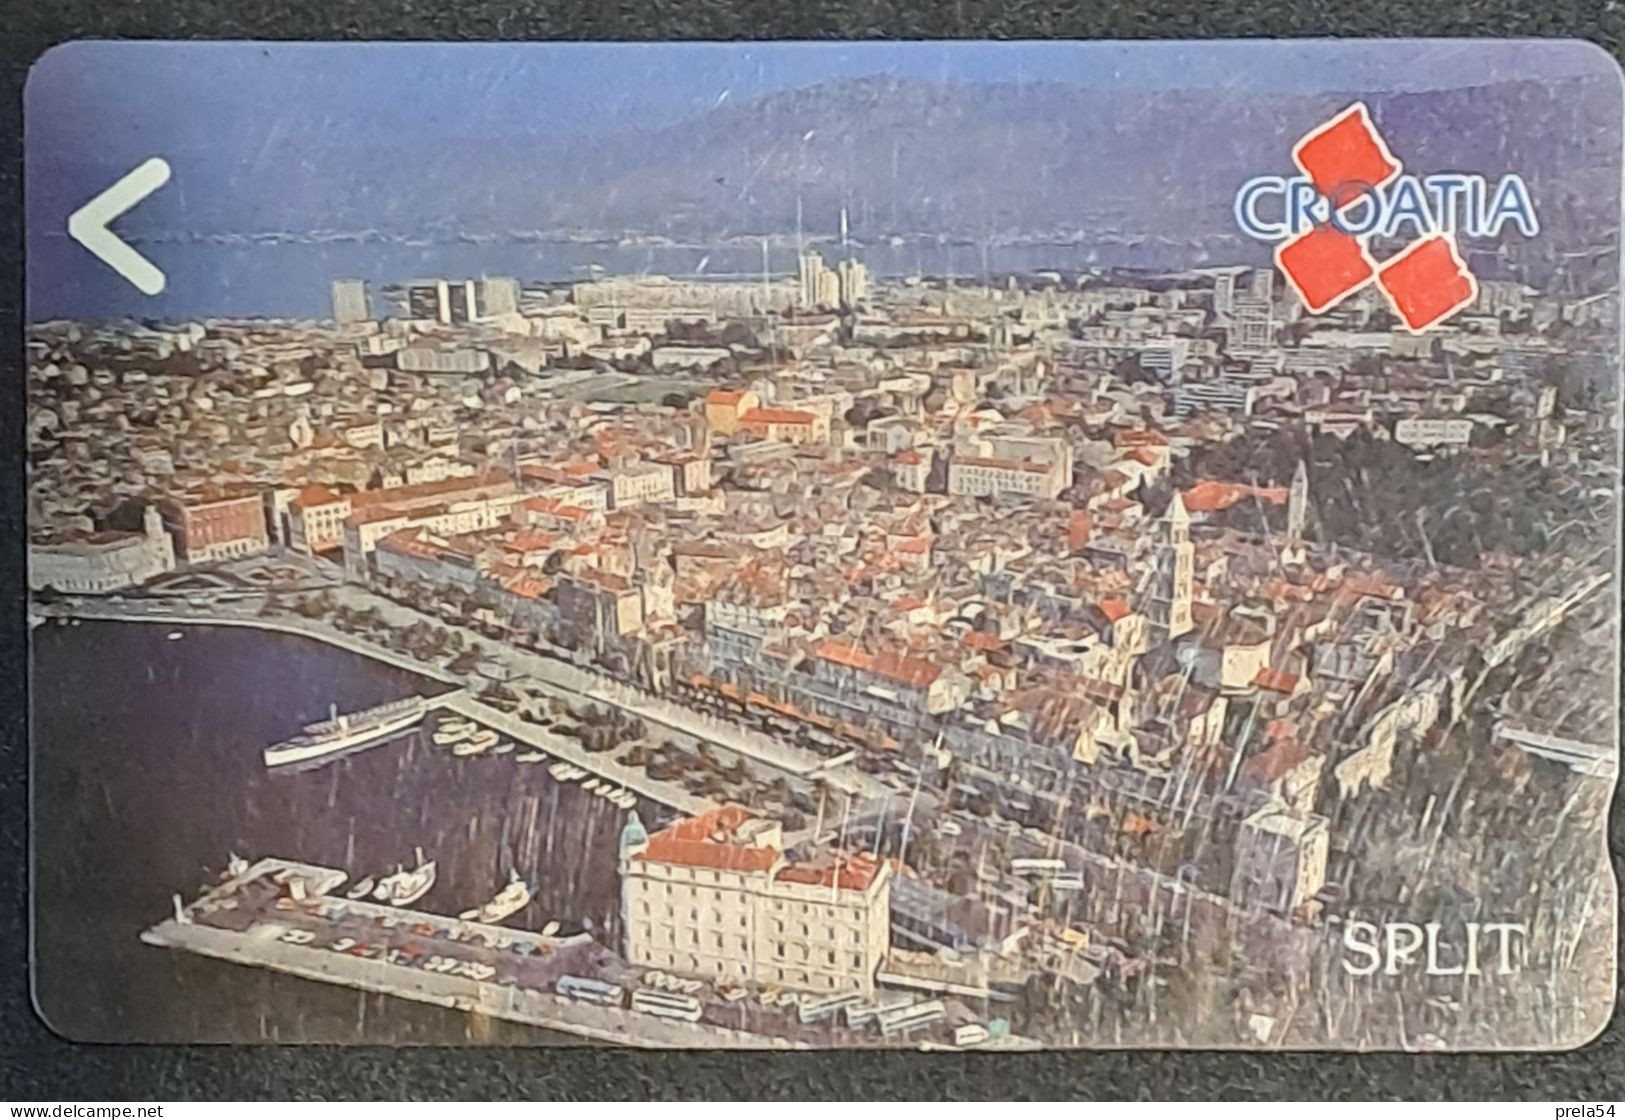 Croatia  - SPLIT Magnetic Card Used - Croatie